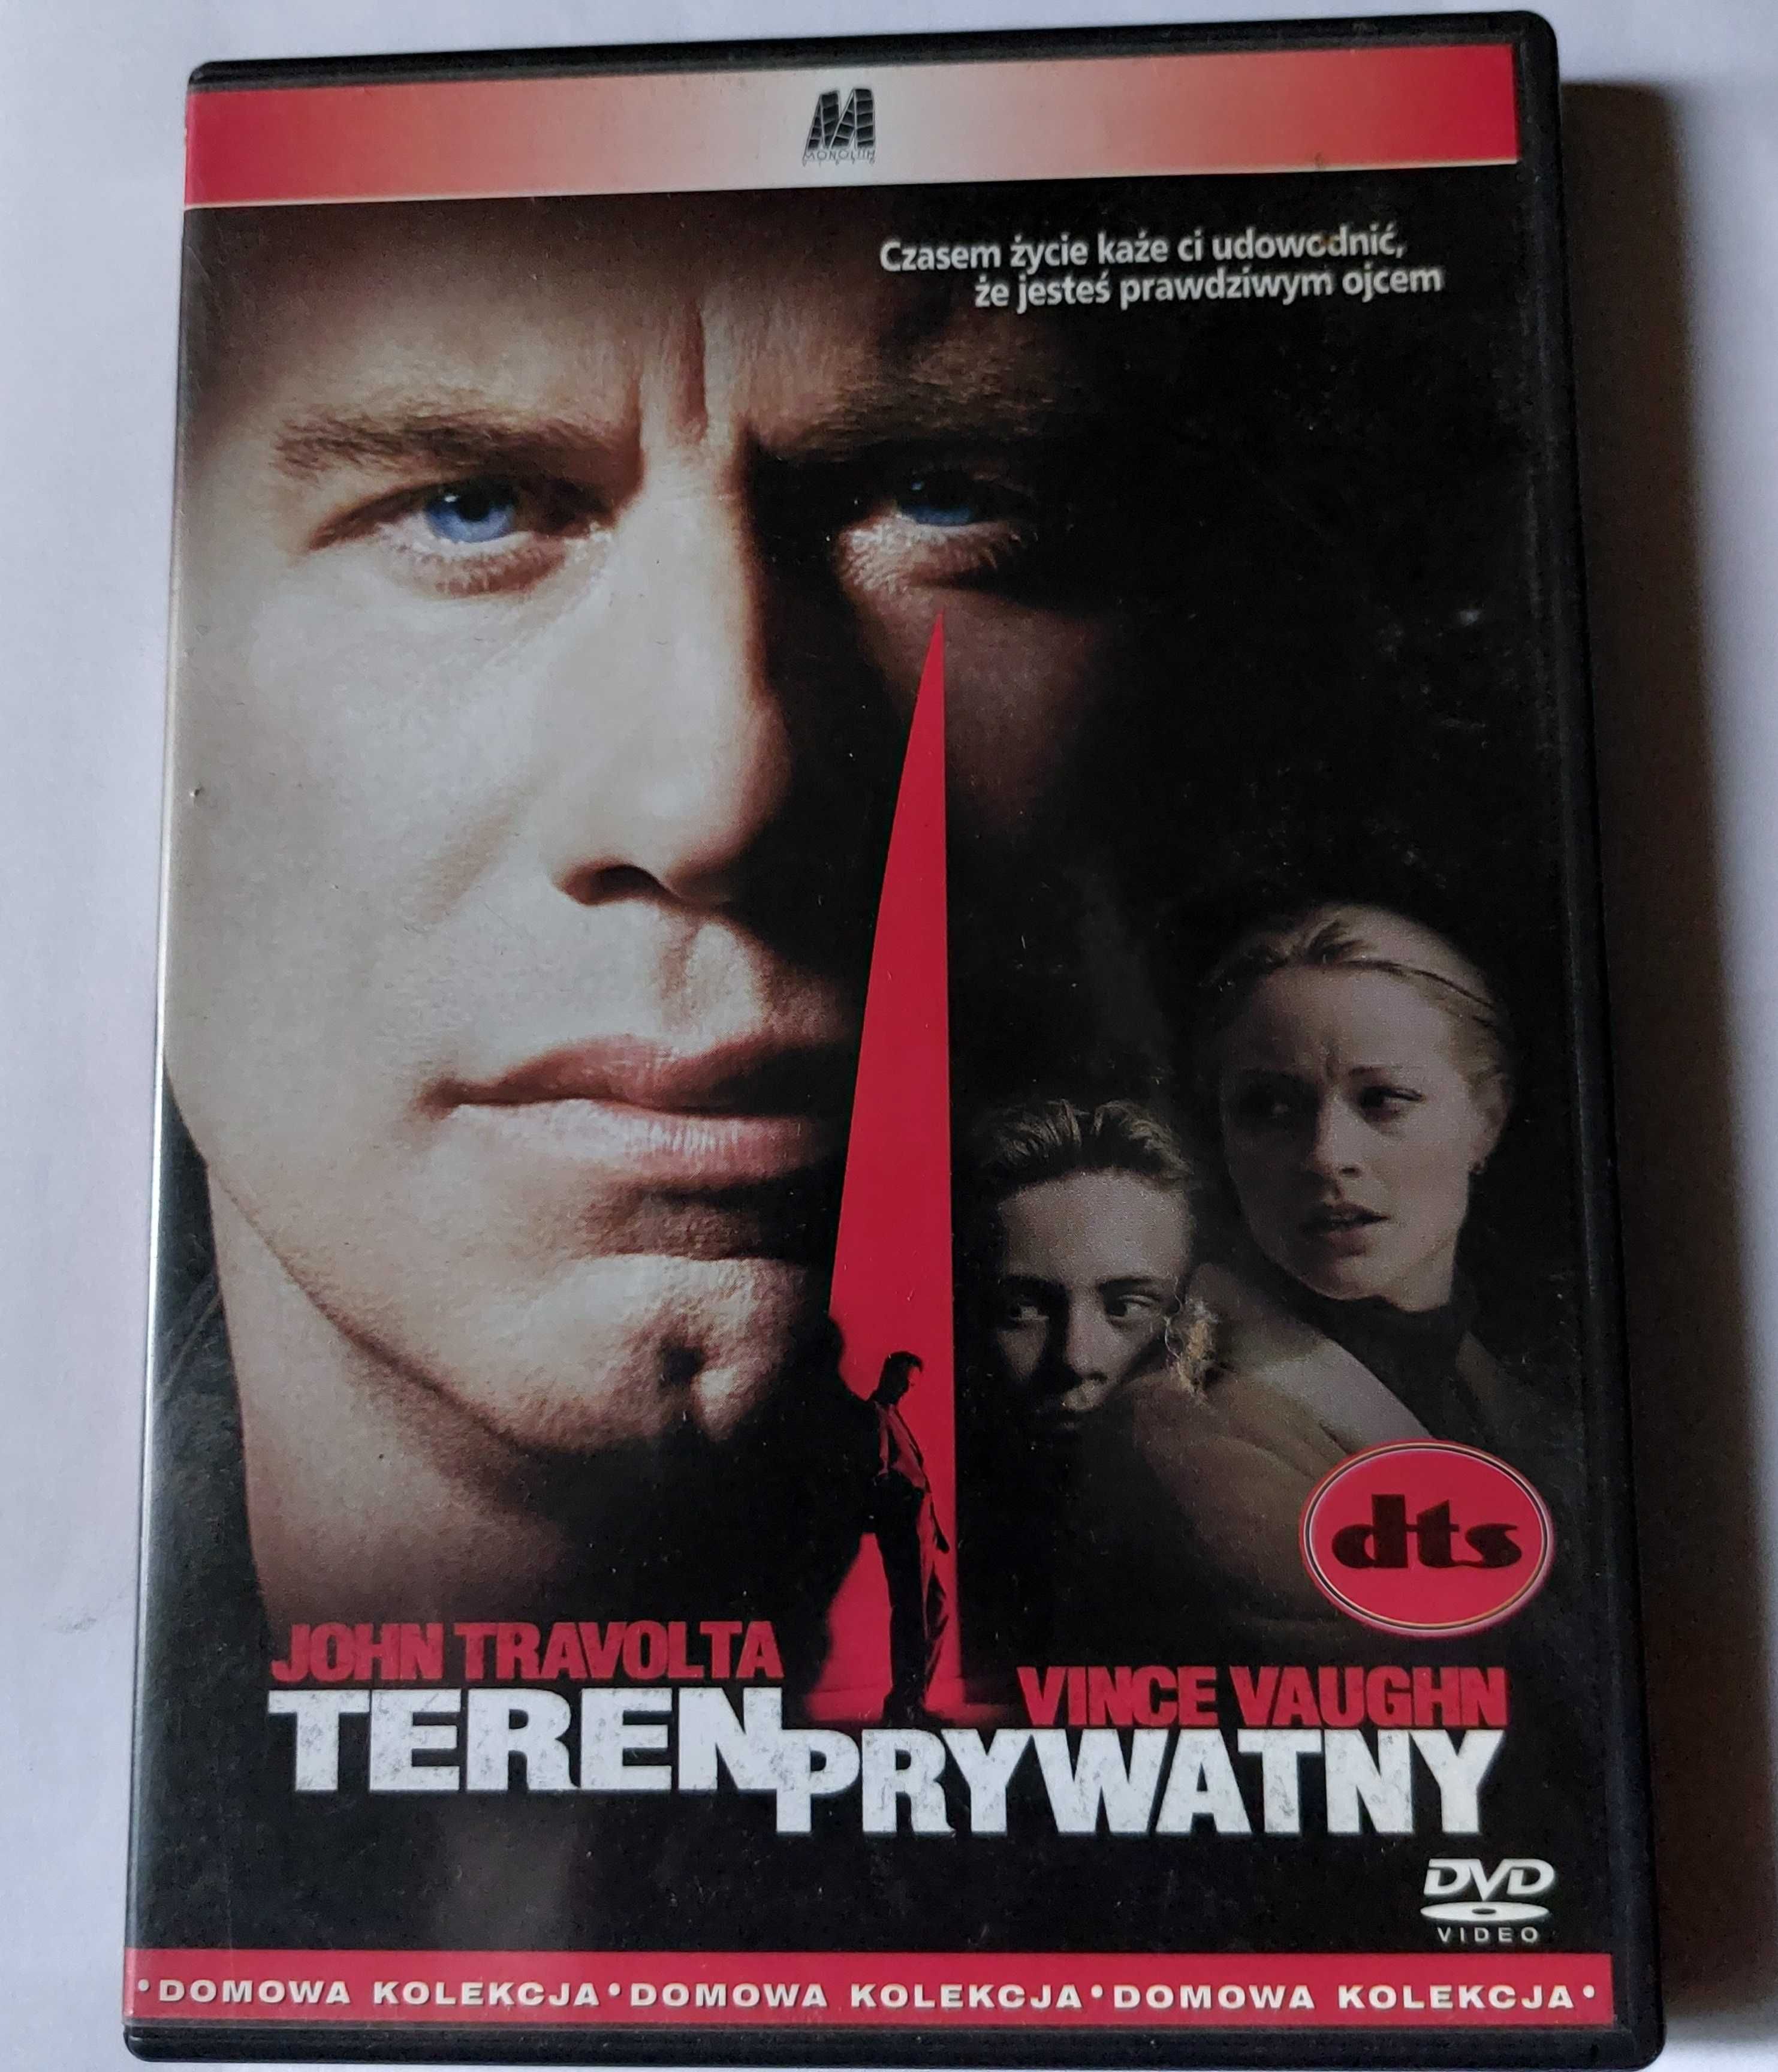 TEREN PRYWATNY | film po polsku na DVD